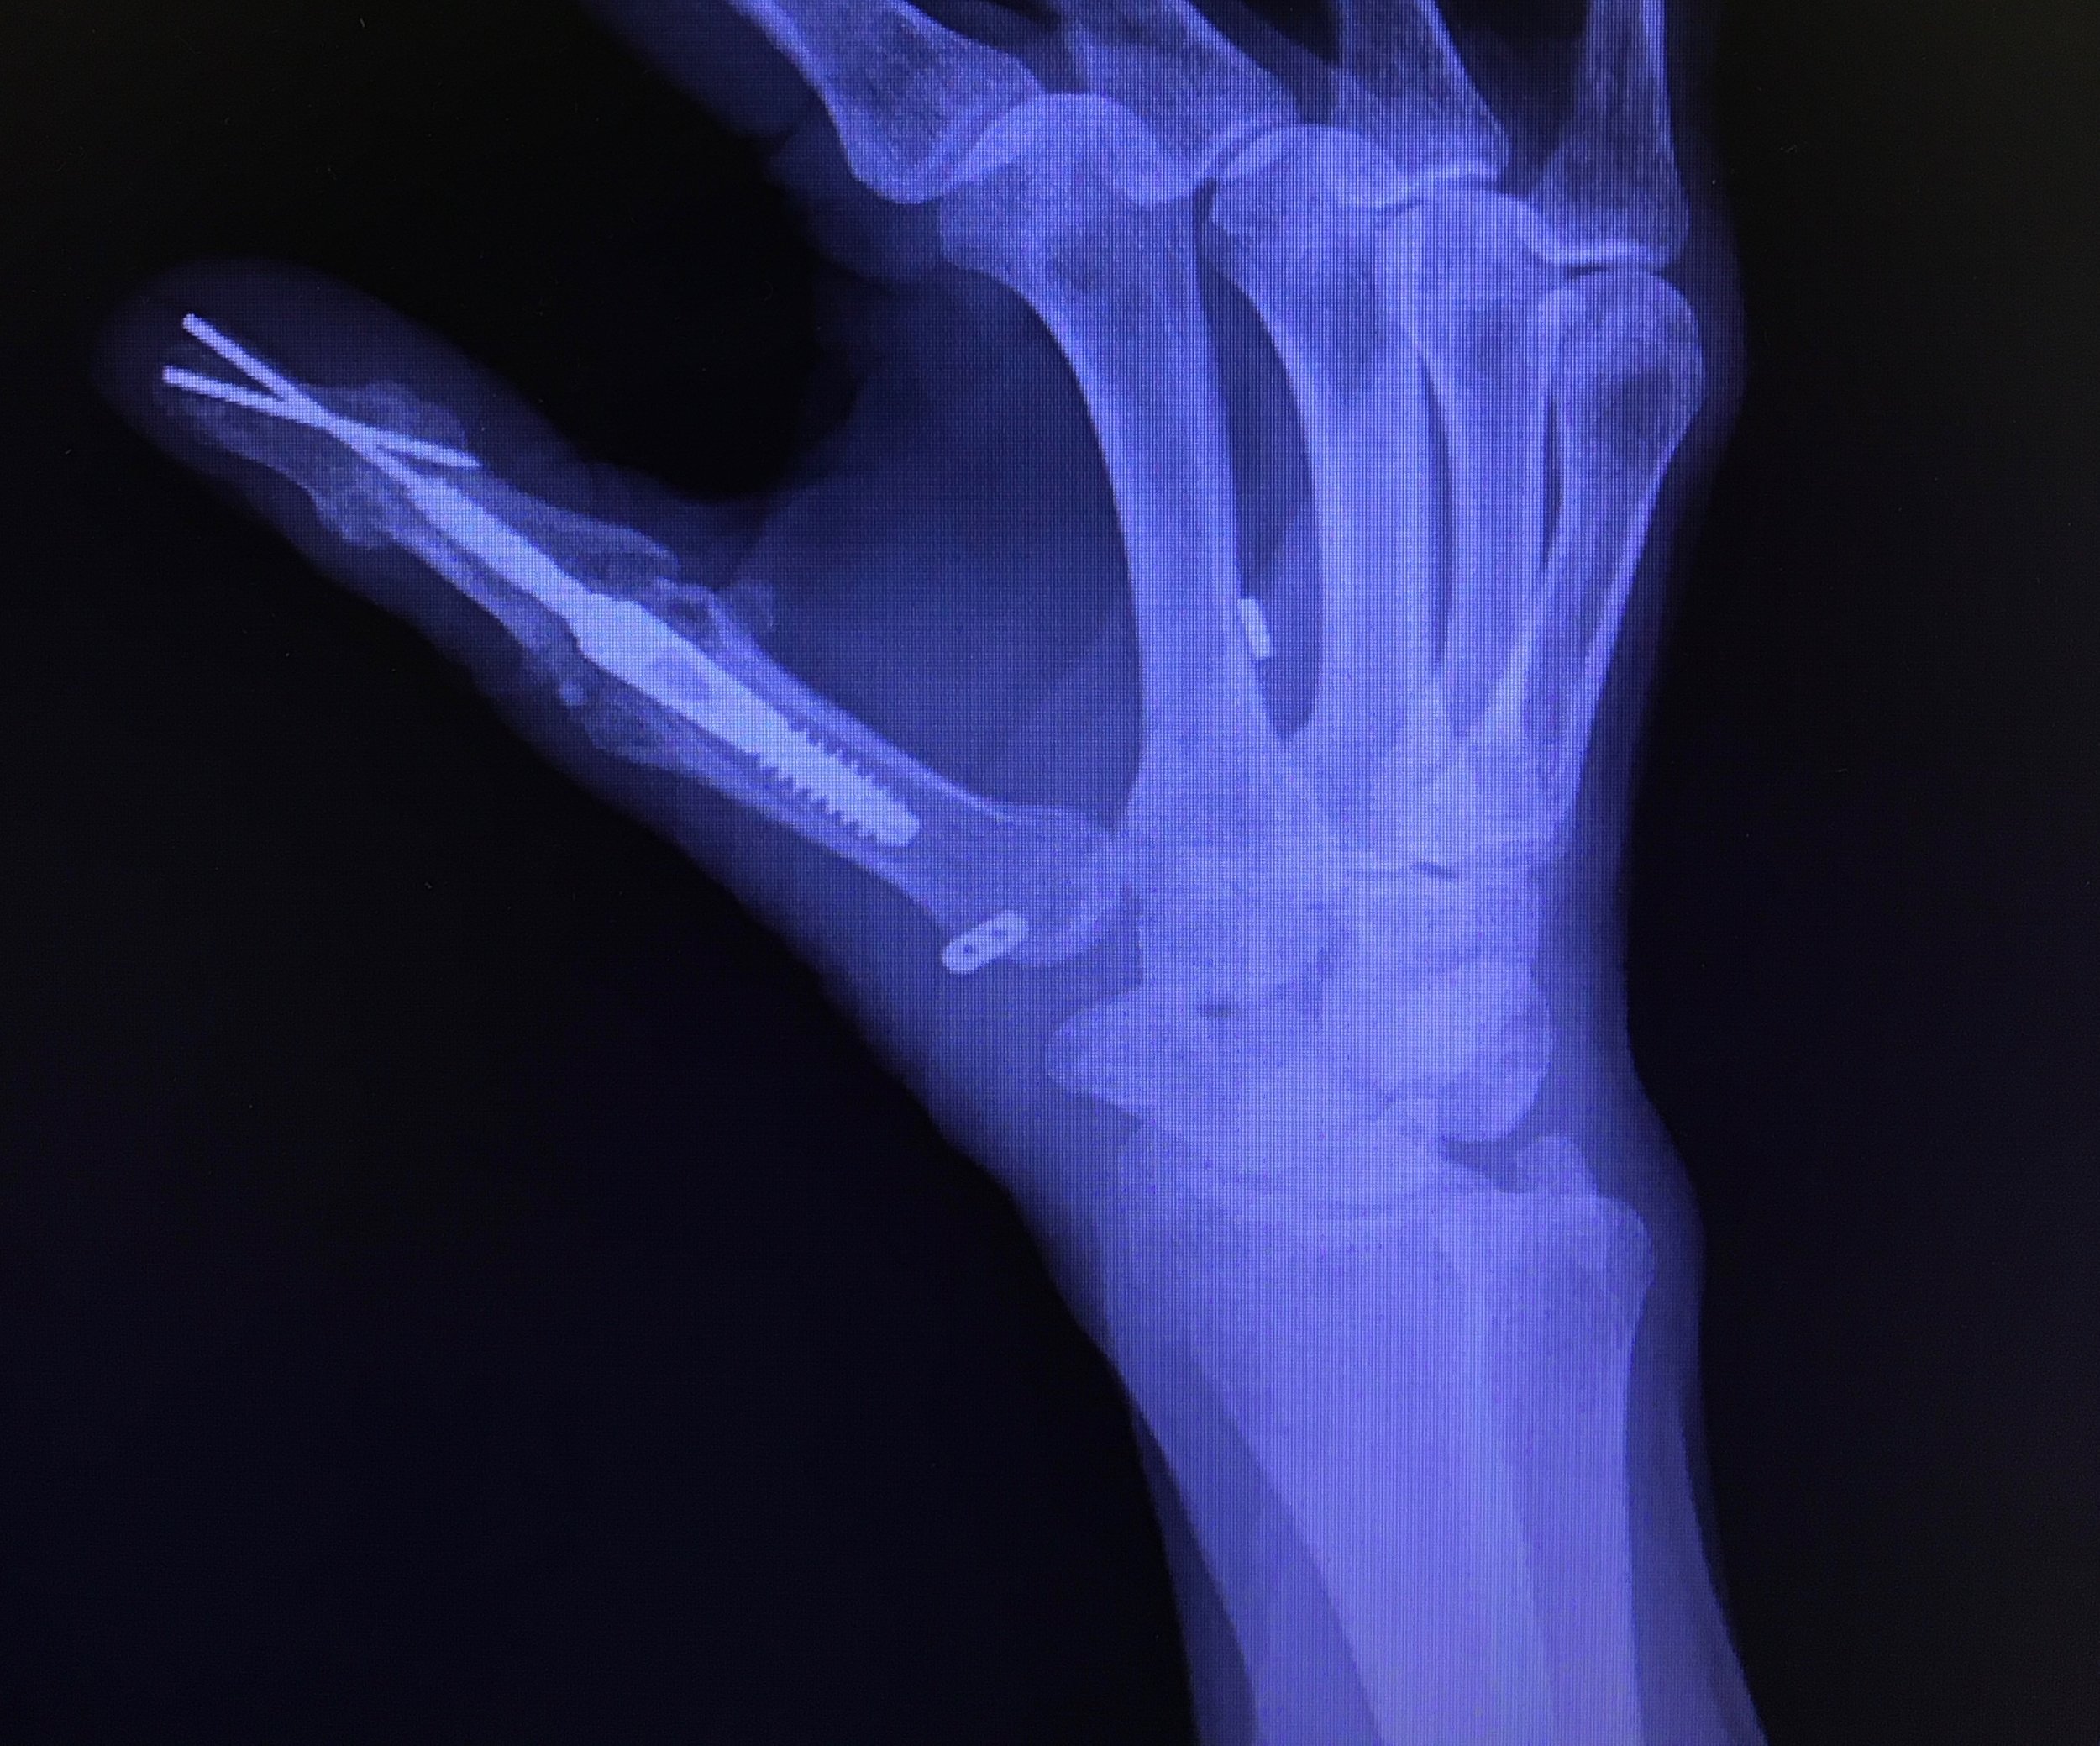 Postop - Arthritis Hand